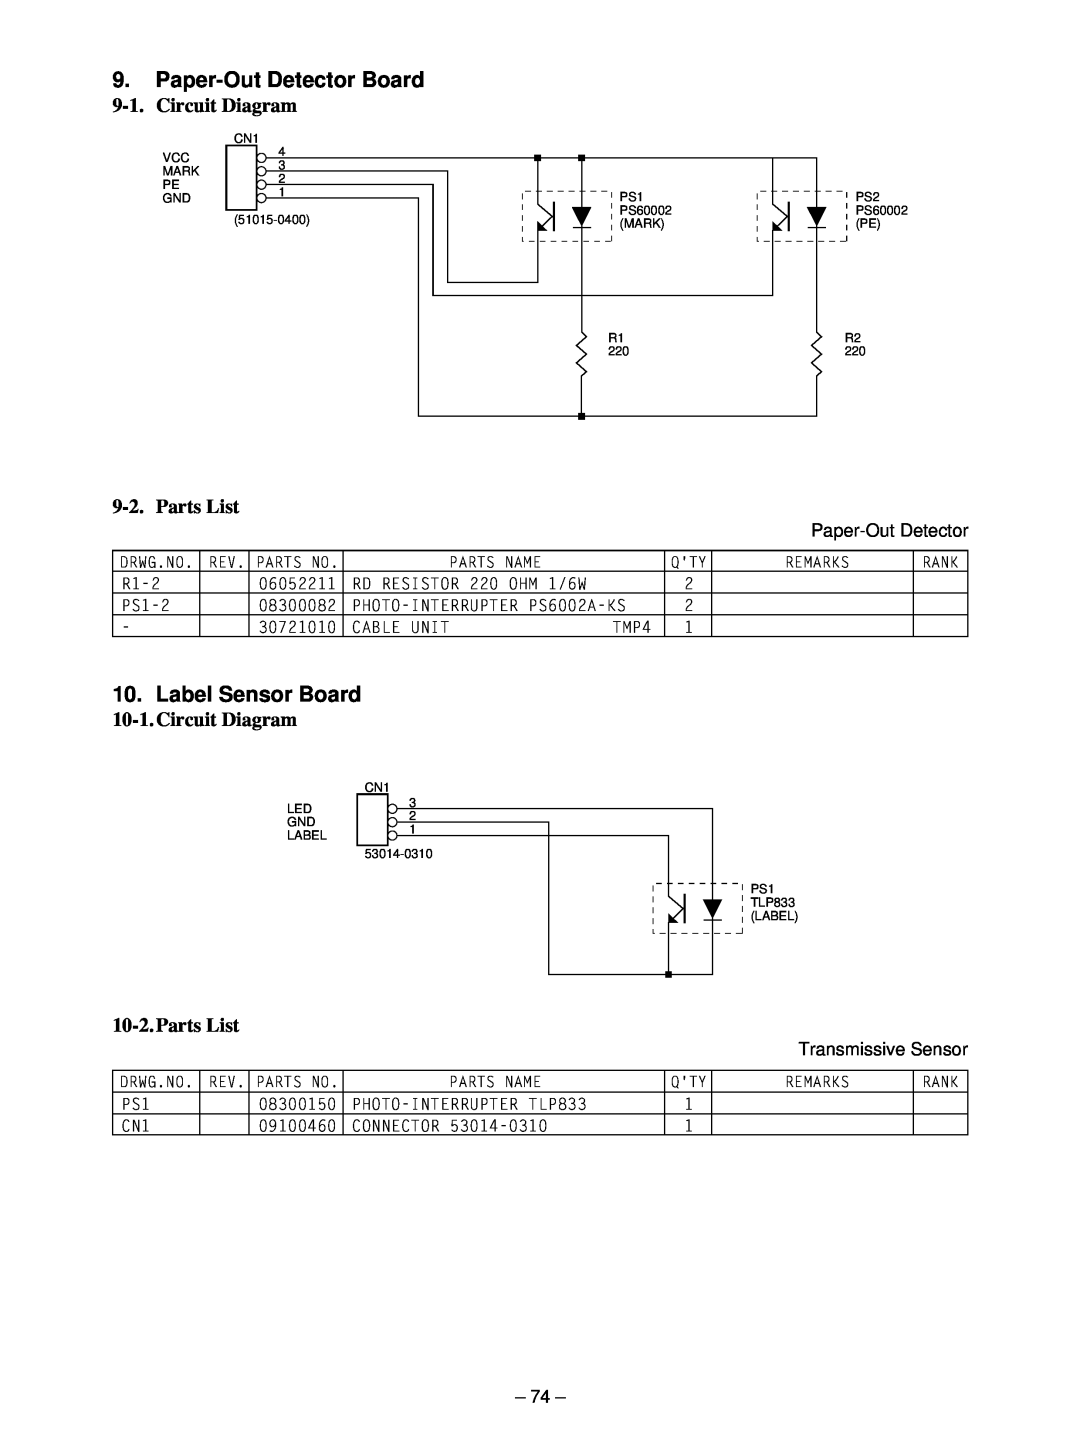 Star Micronics TSP400 Paper-Out Detector Board, Label Sensor Board, Circuit Diagram, Parts List, Transmissive Sensor 